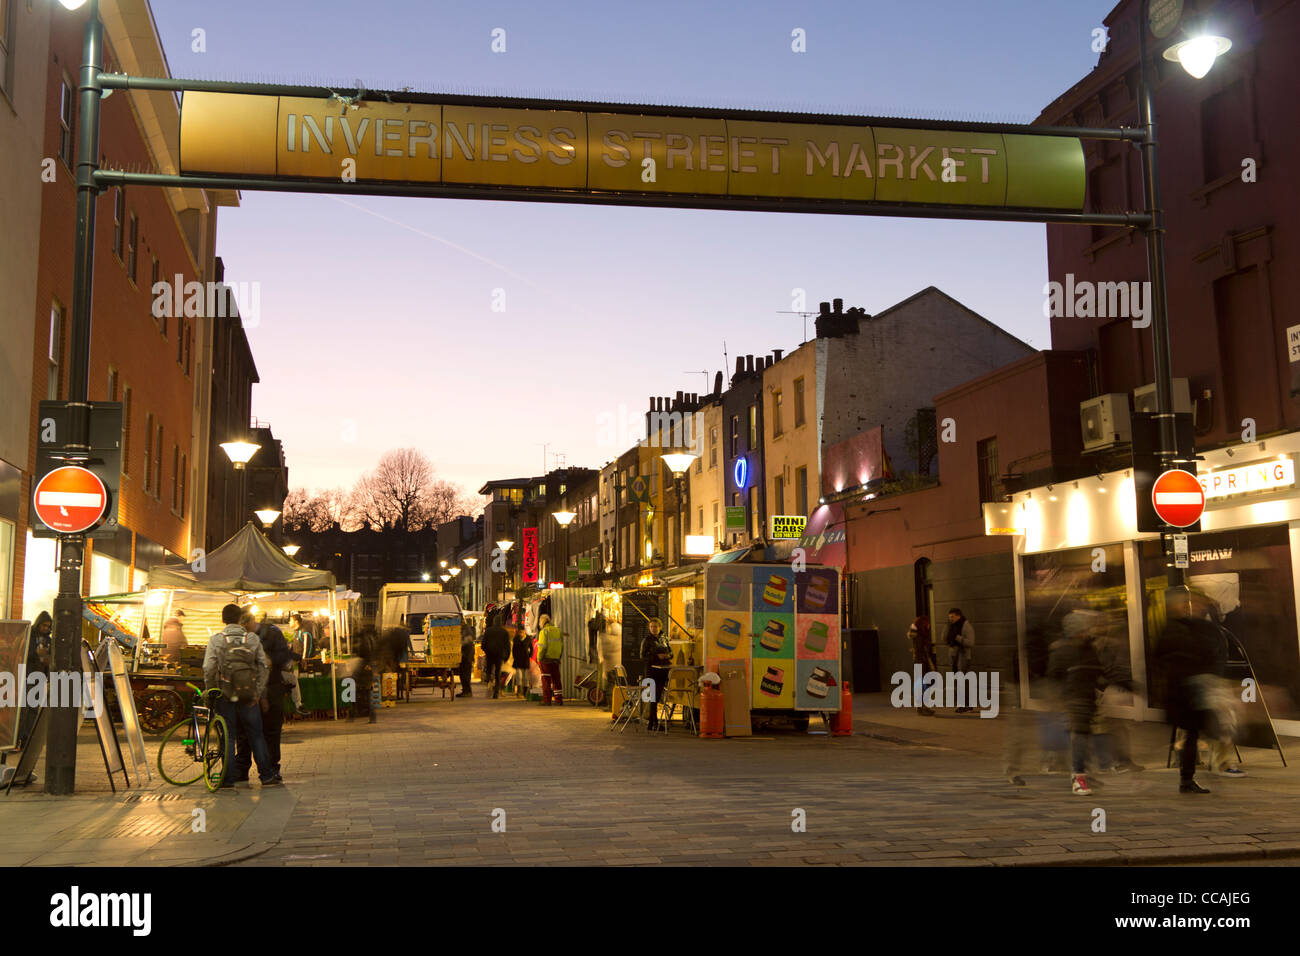 Inverness Street Market - Camden Town - London Stockfoto